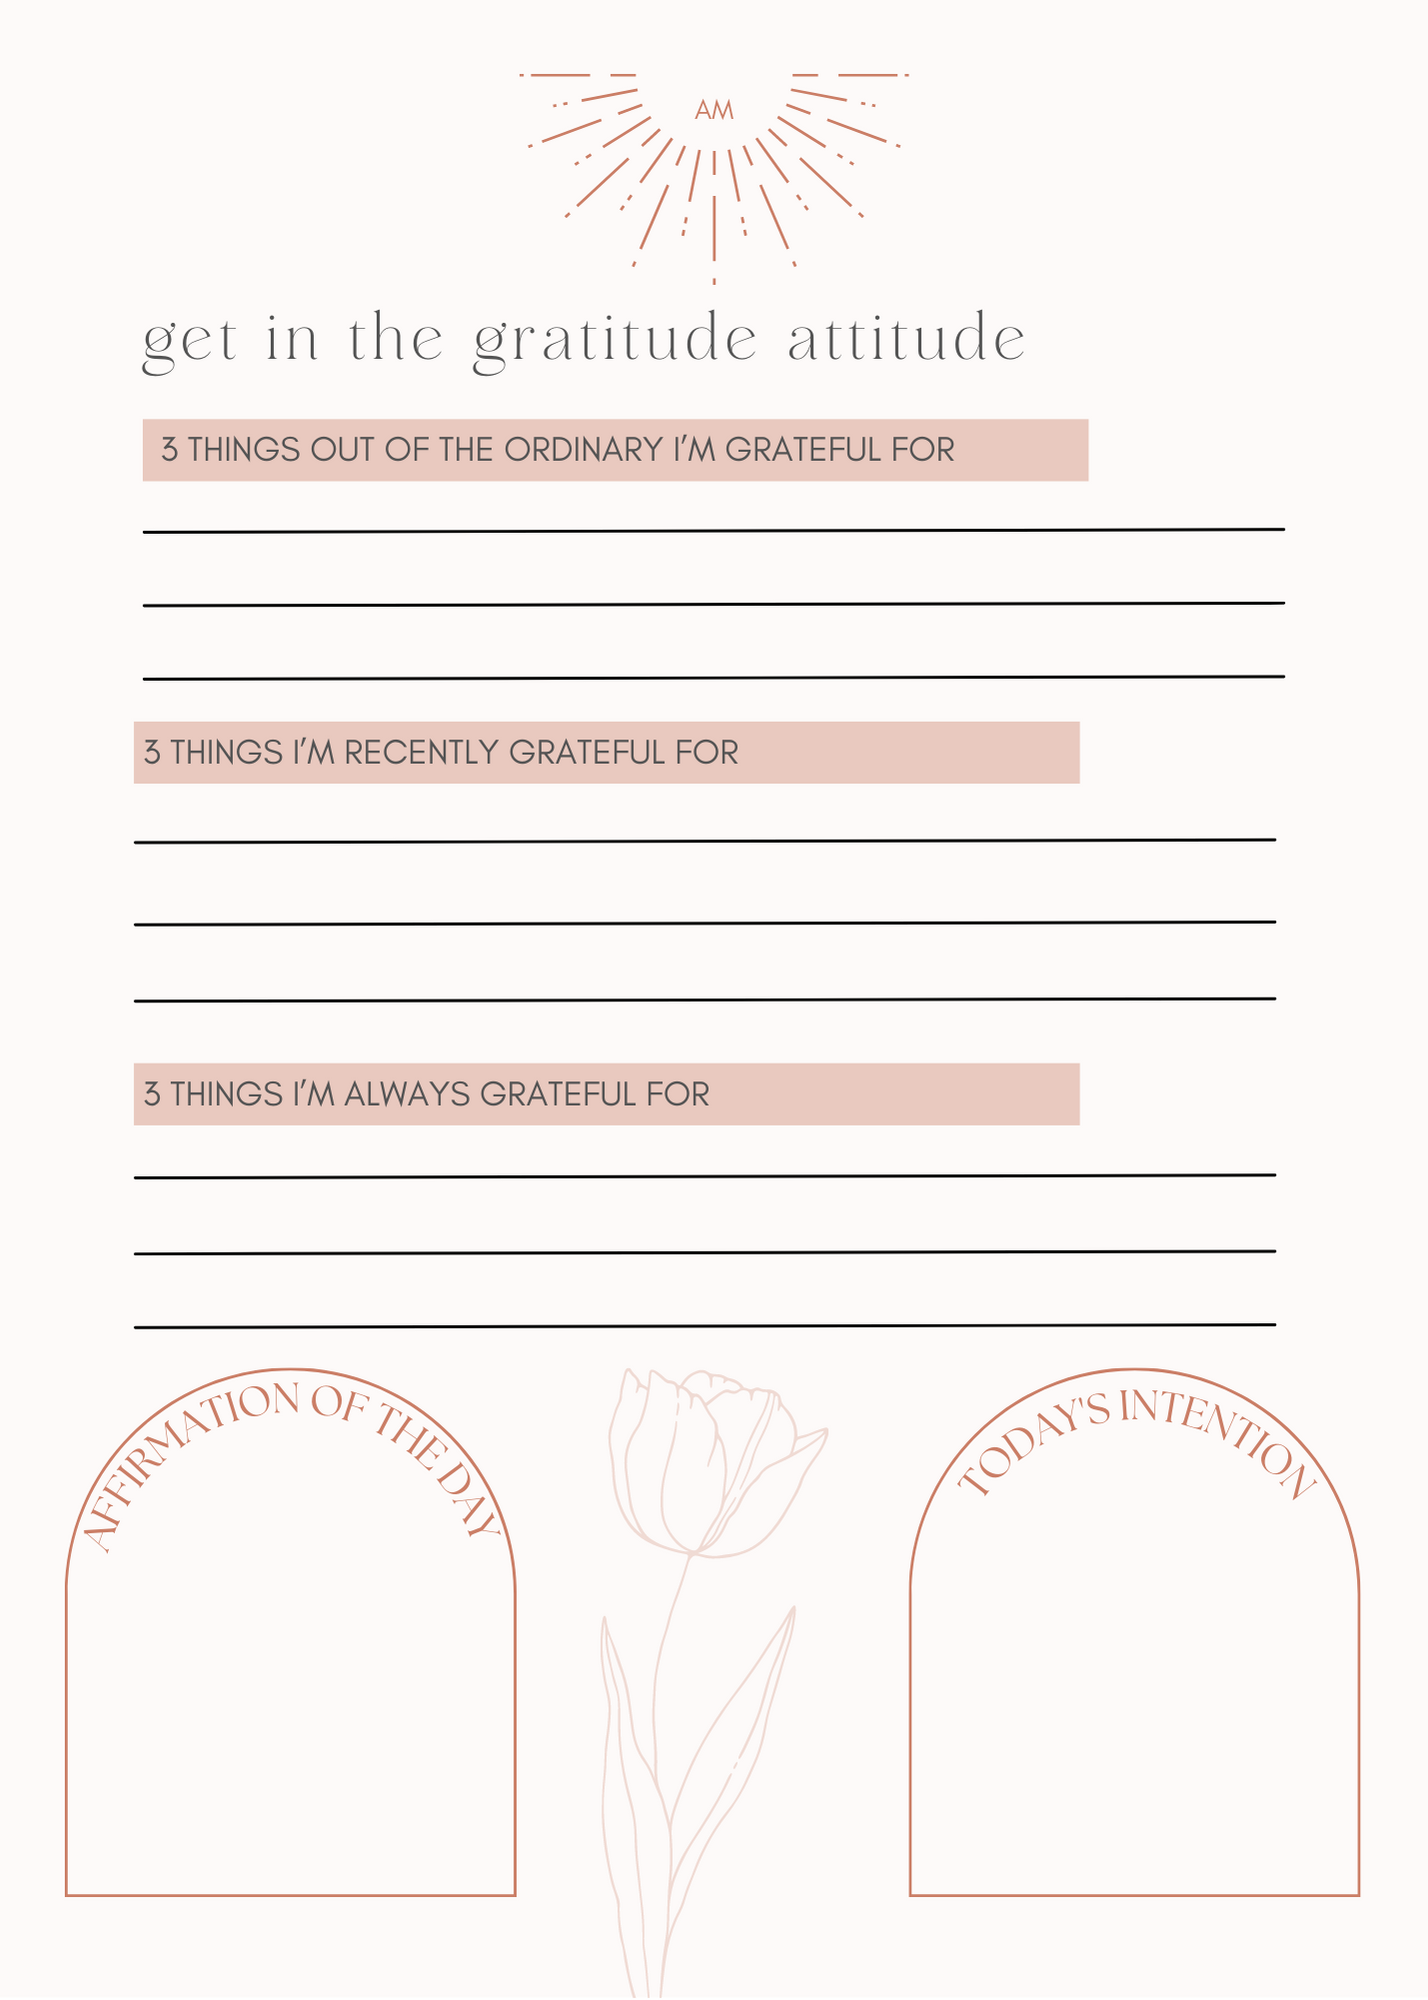 the gratitude journal